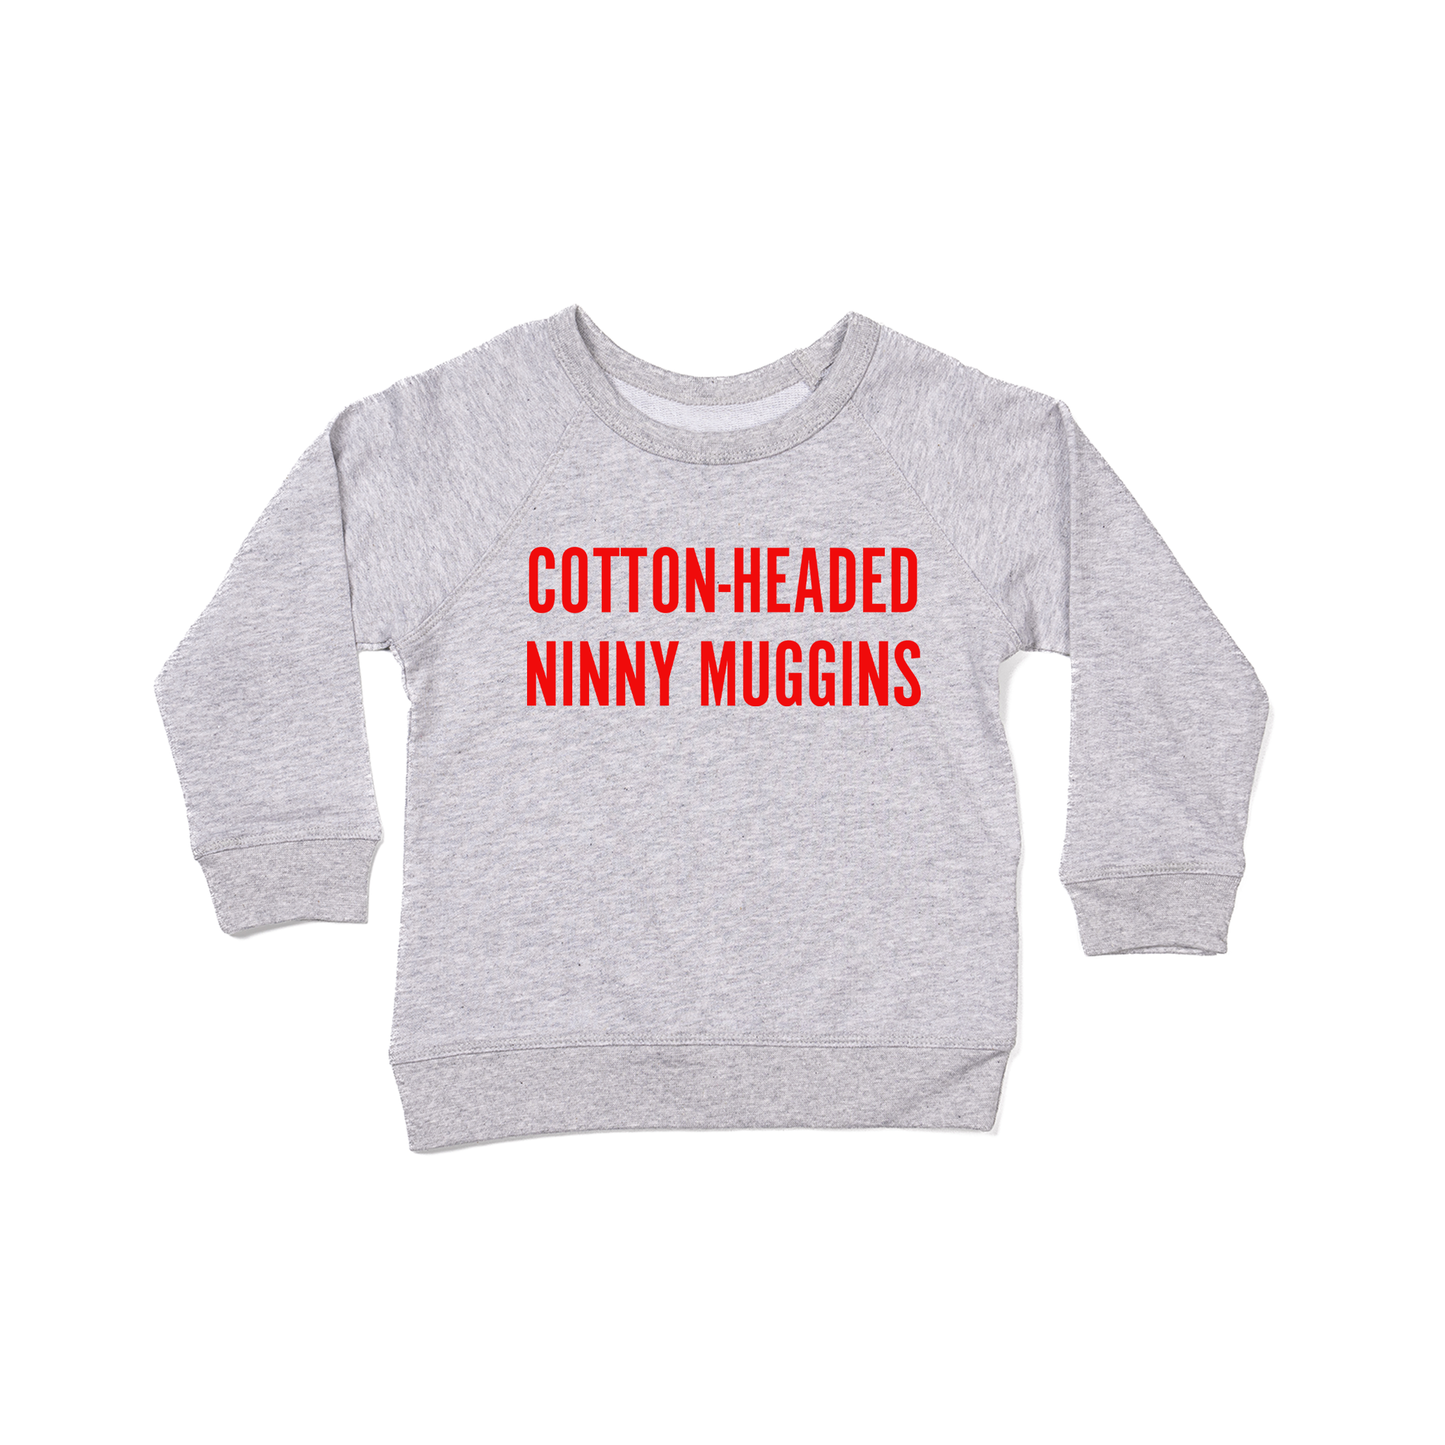 Cotton-Headed Ninny Muggins (Red) - Kids Sweatshirt (Heather Gray)